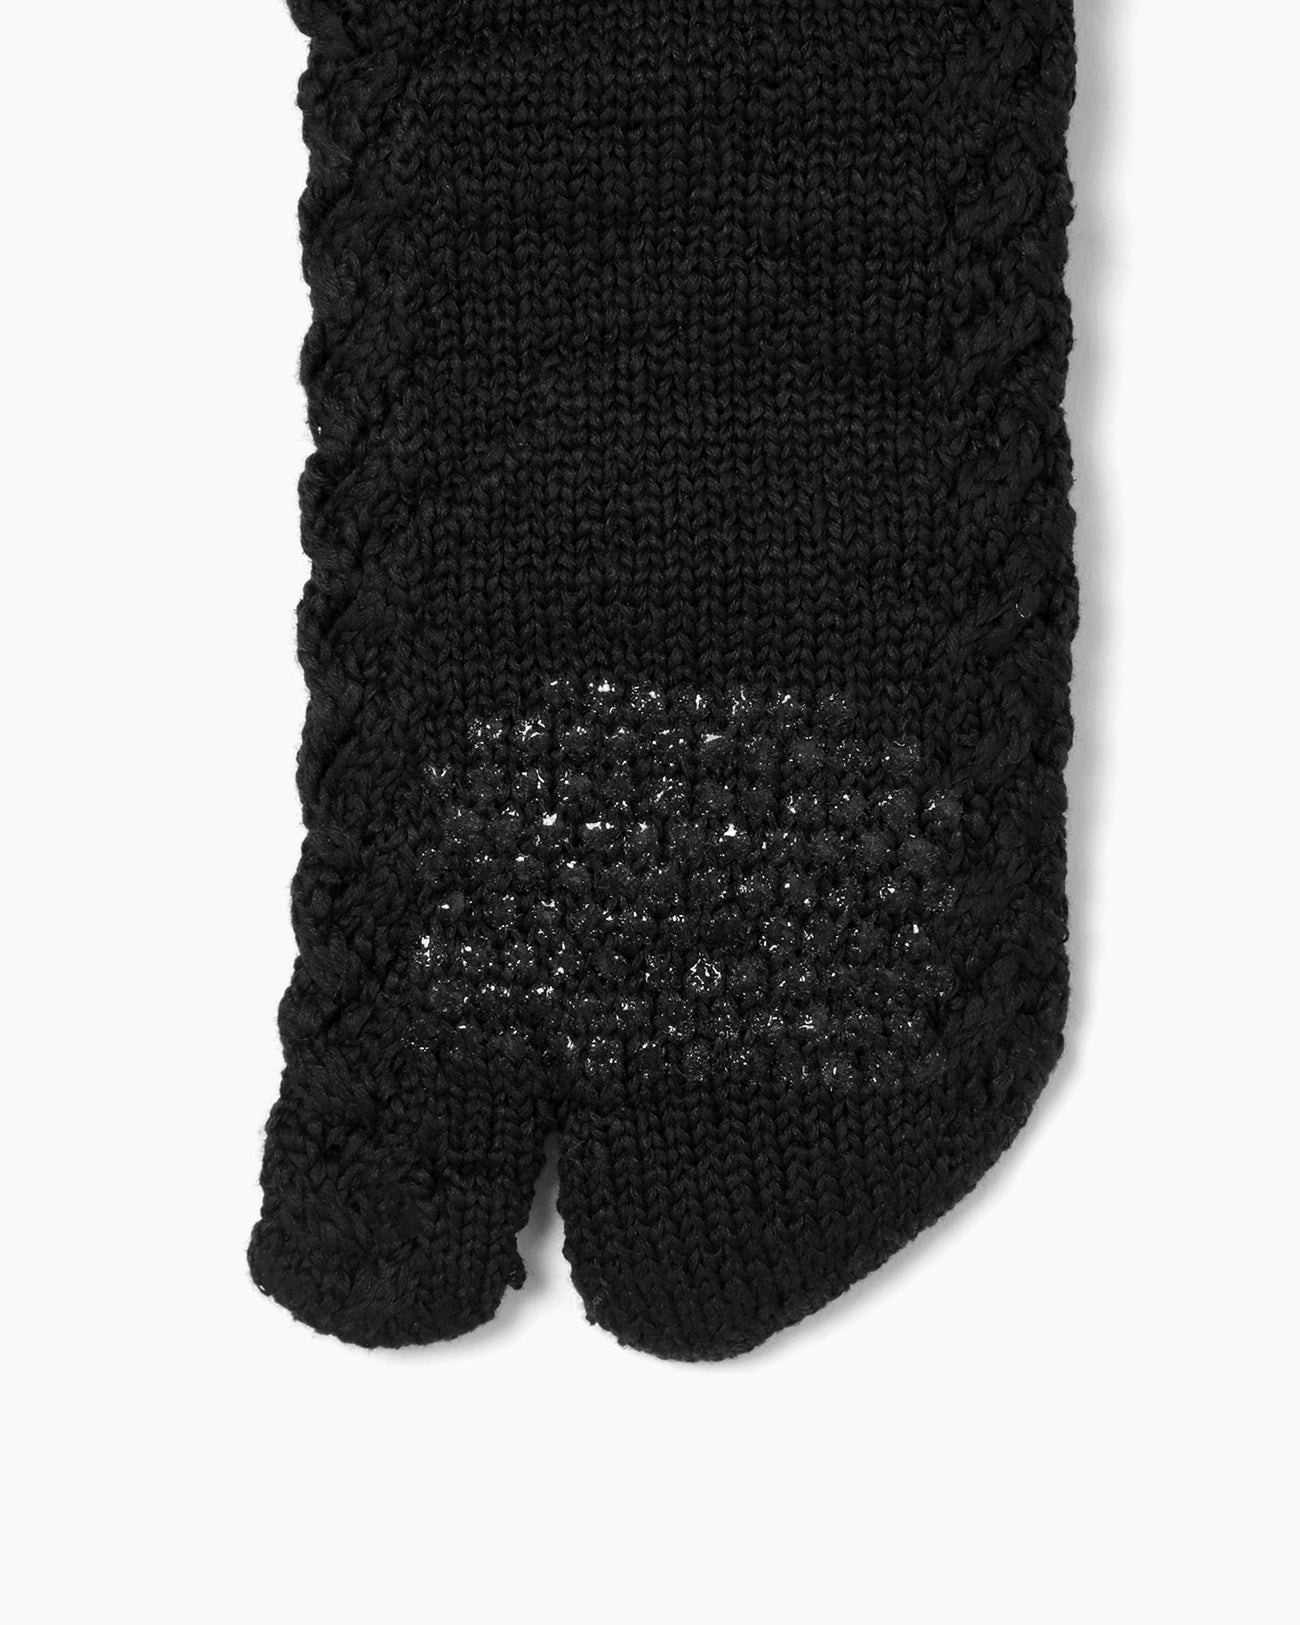 Knitted Tabi Socks - black